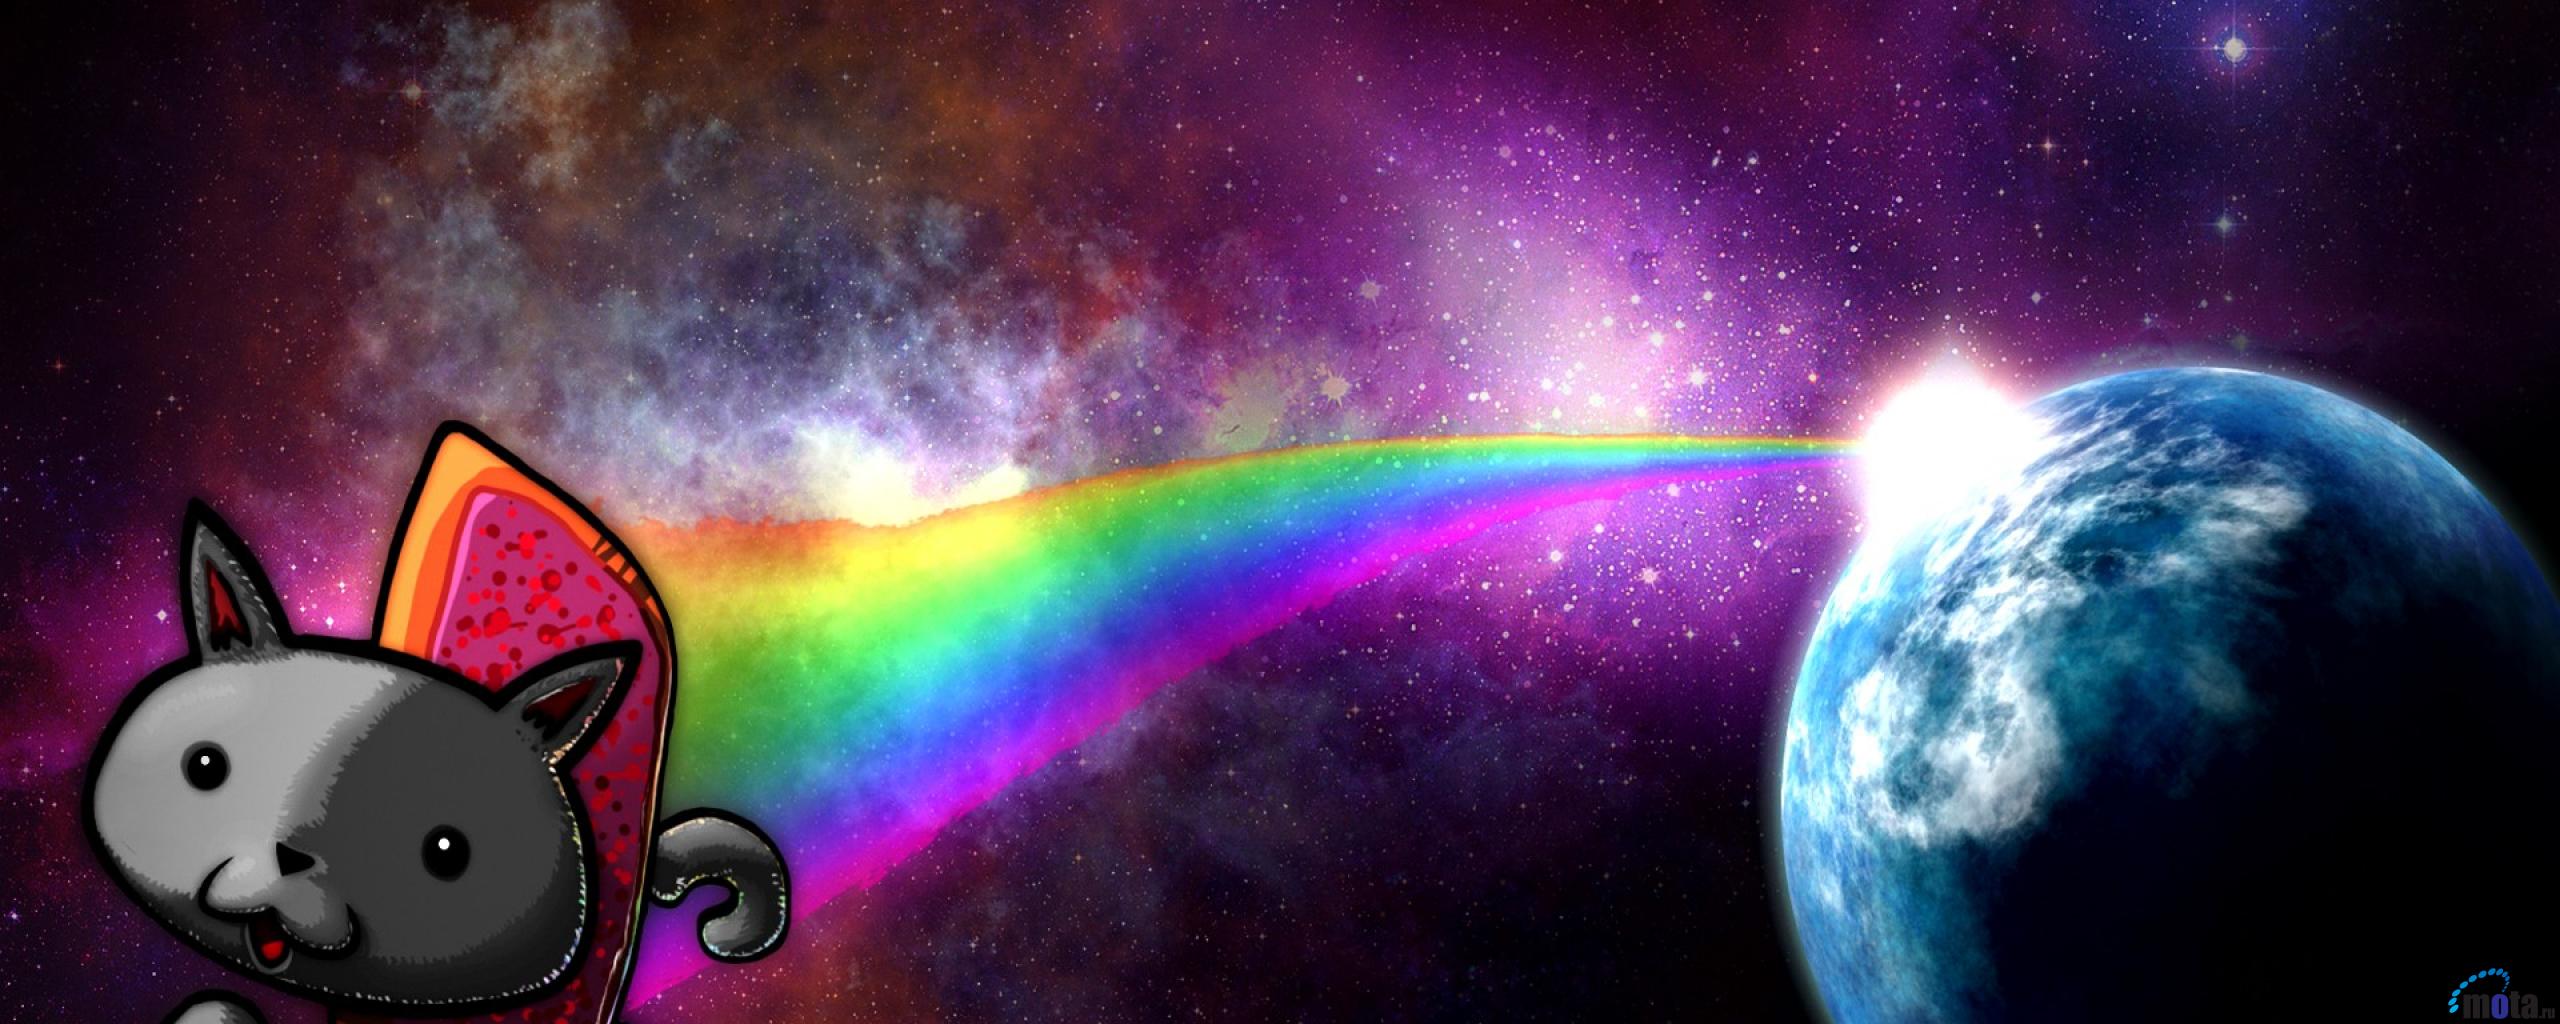 Desktop Wallpaper Nyan Cat And A Rainbow